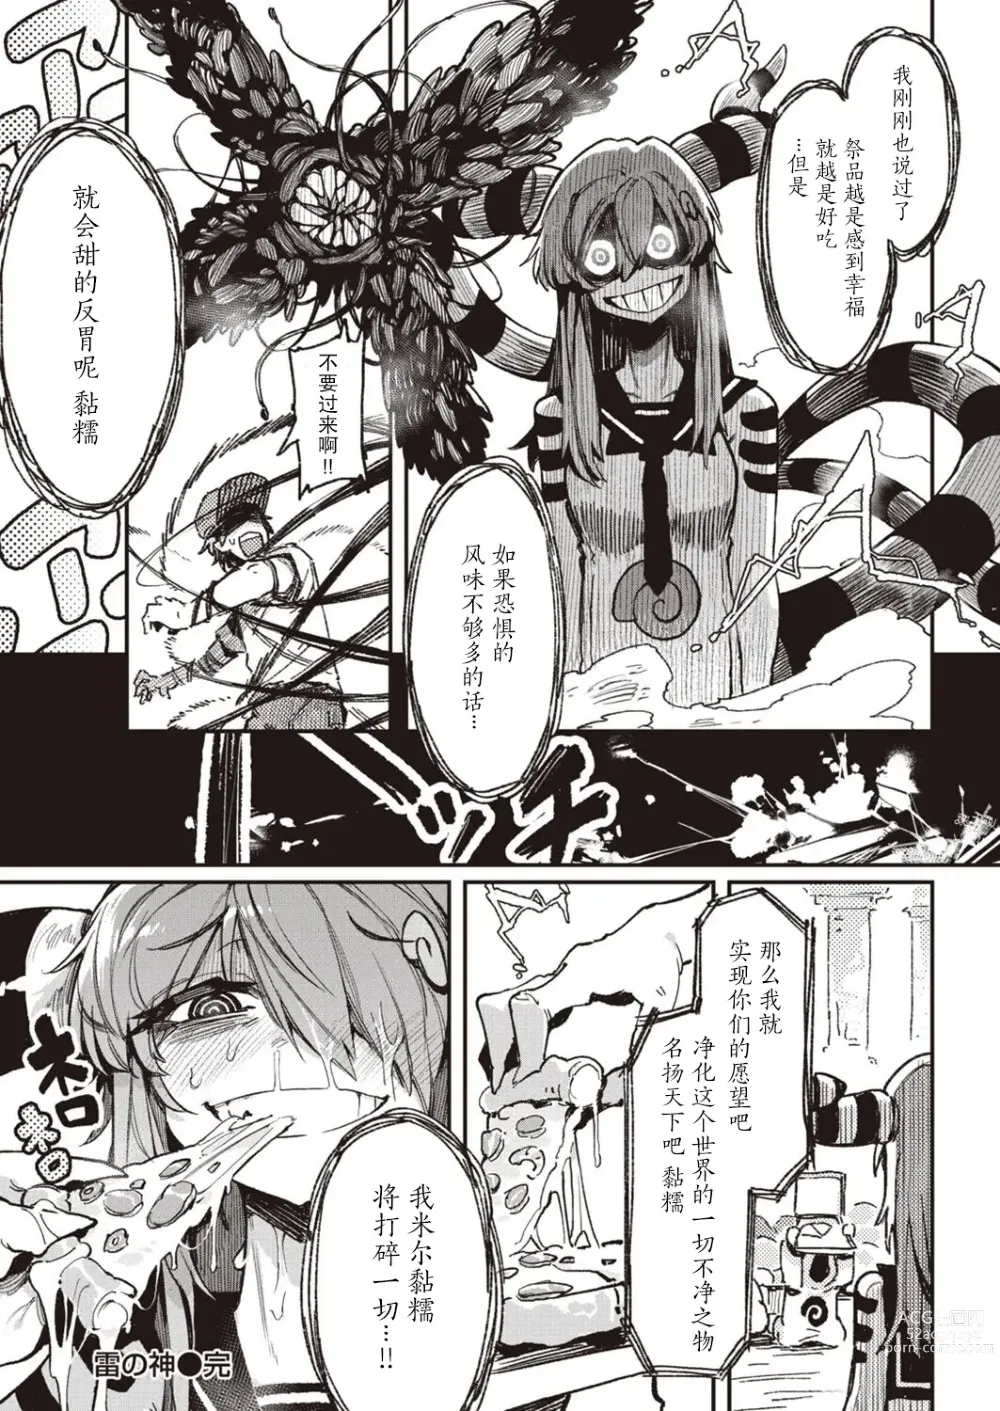 Page 50 of manga Inogami